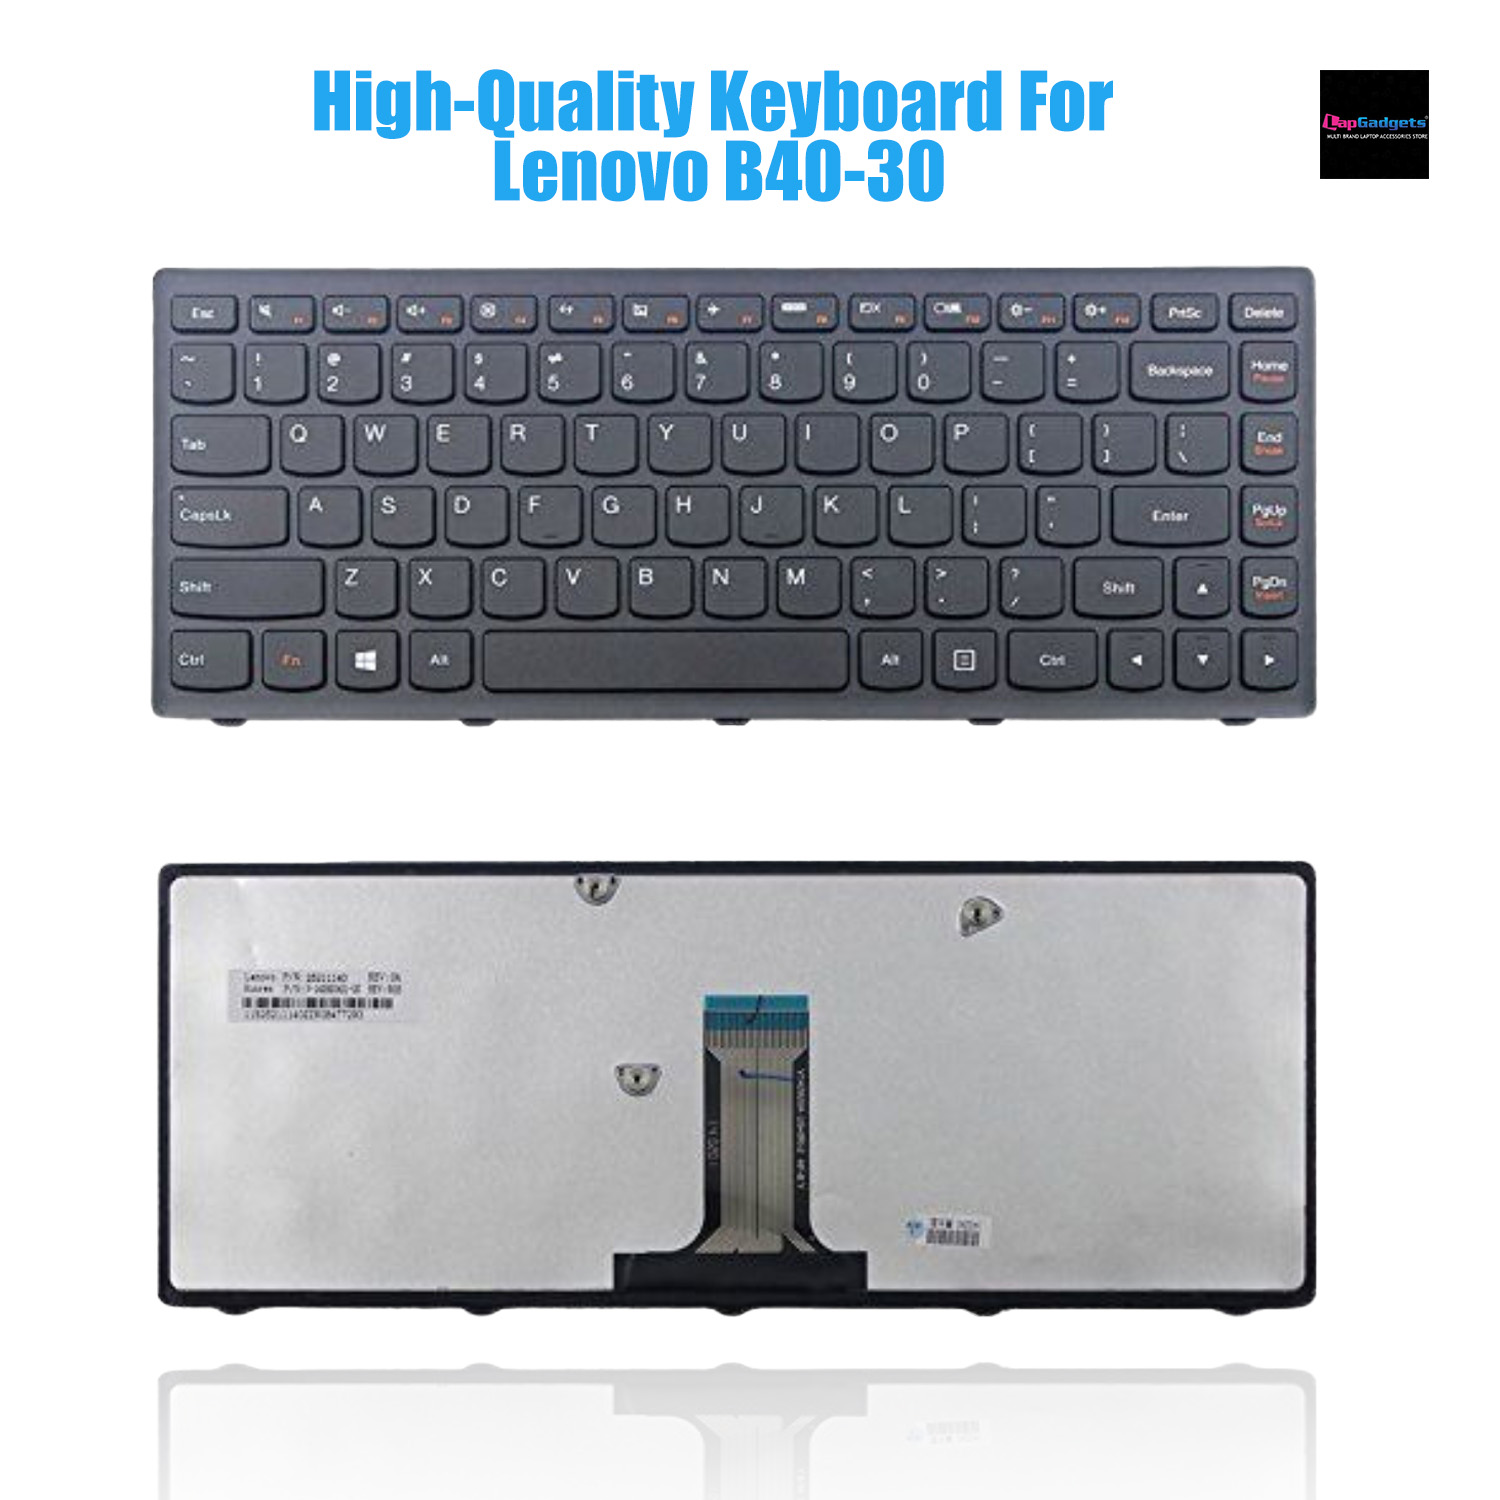 High-Quality Keyboard For Lenovo Laptop B40-30 B40-45 B40-70 B40-80 G40-30 G40-45 G40-70 G40-80 Z40-70 Z40-75